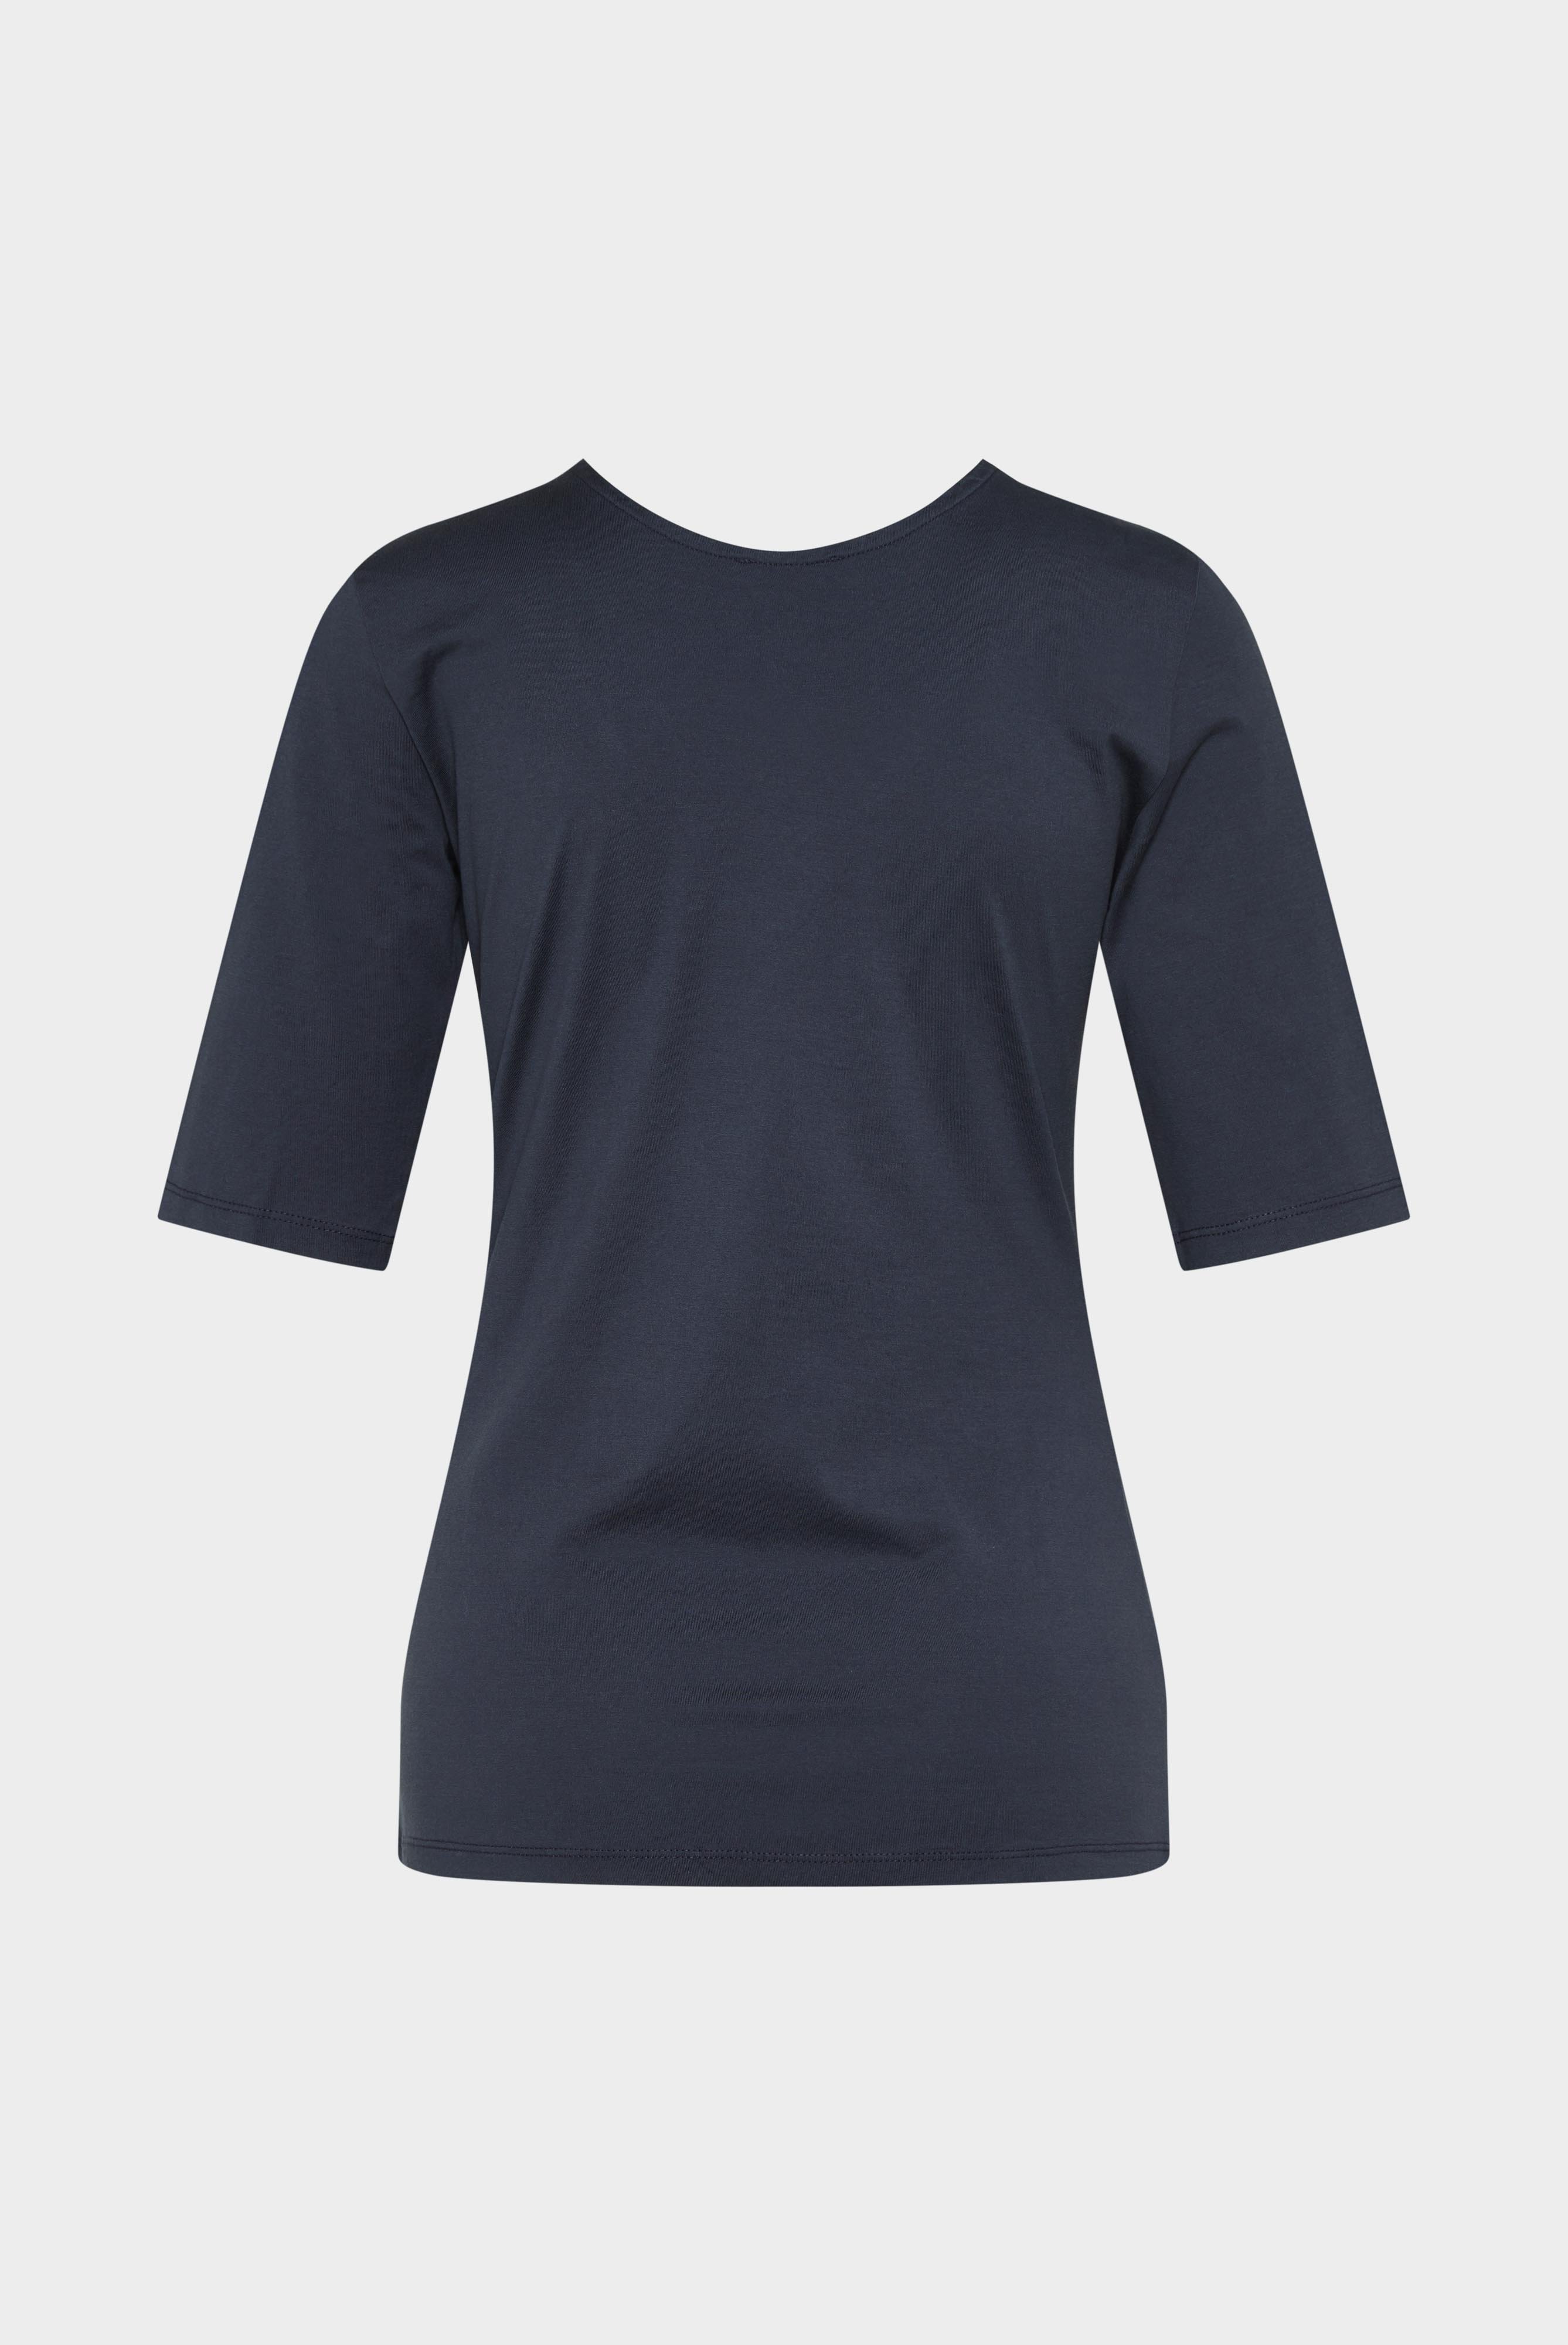 Tops & T-Shirts+Urban Jersey Wide Neck T-Shirt+05.2911..Z20044.790.XS